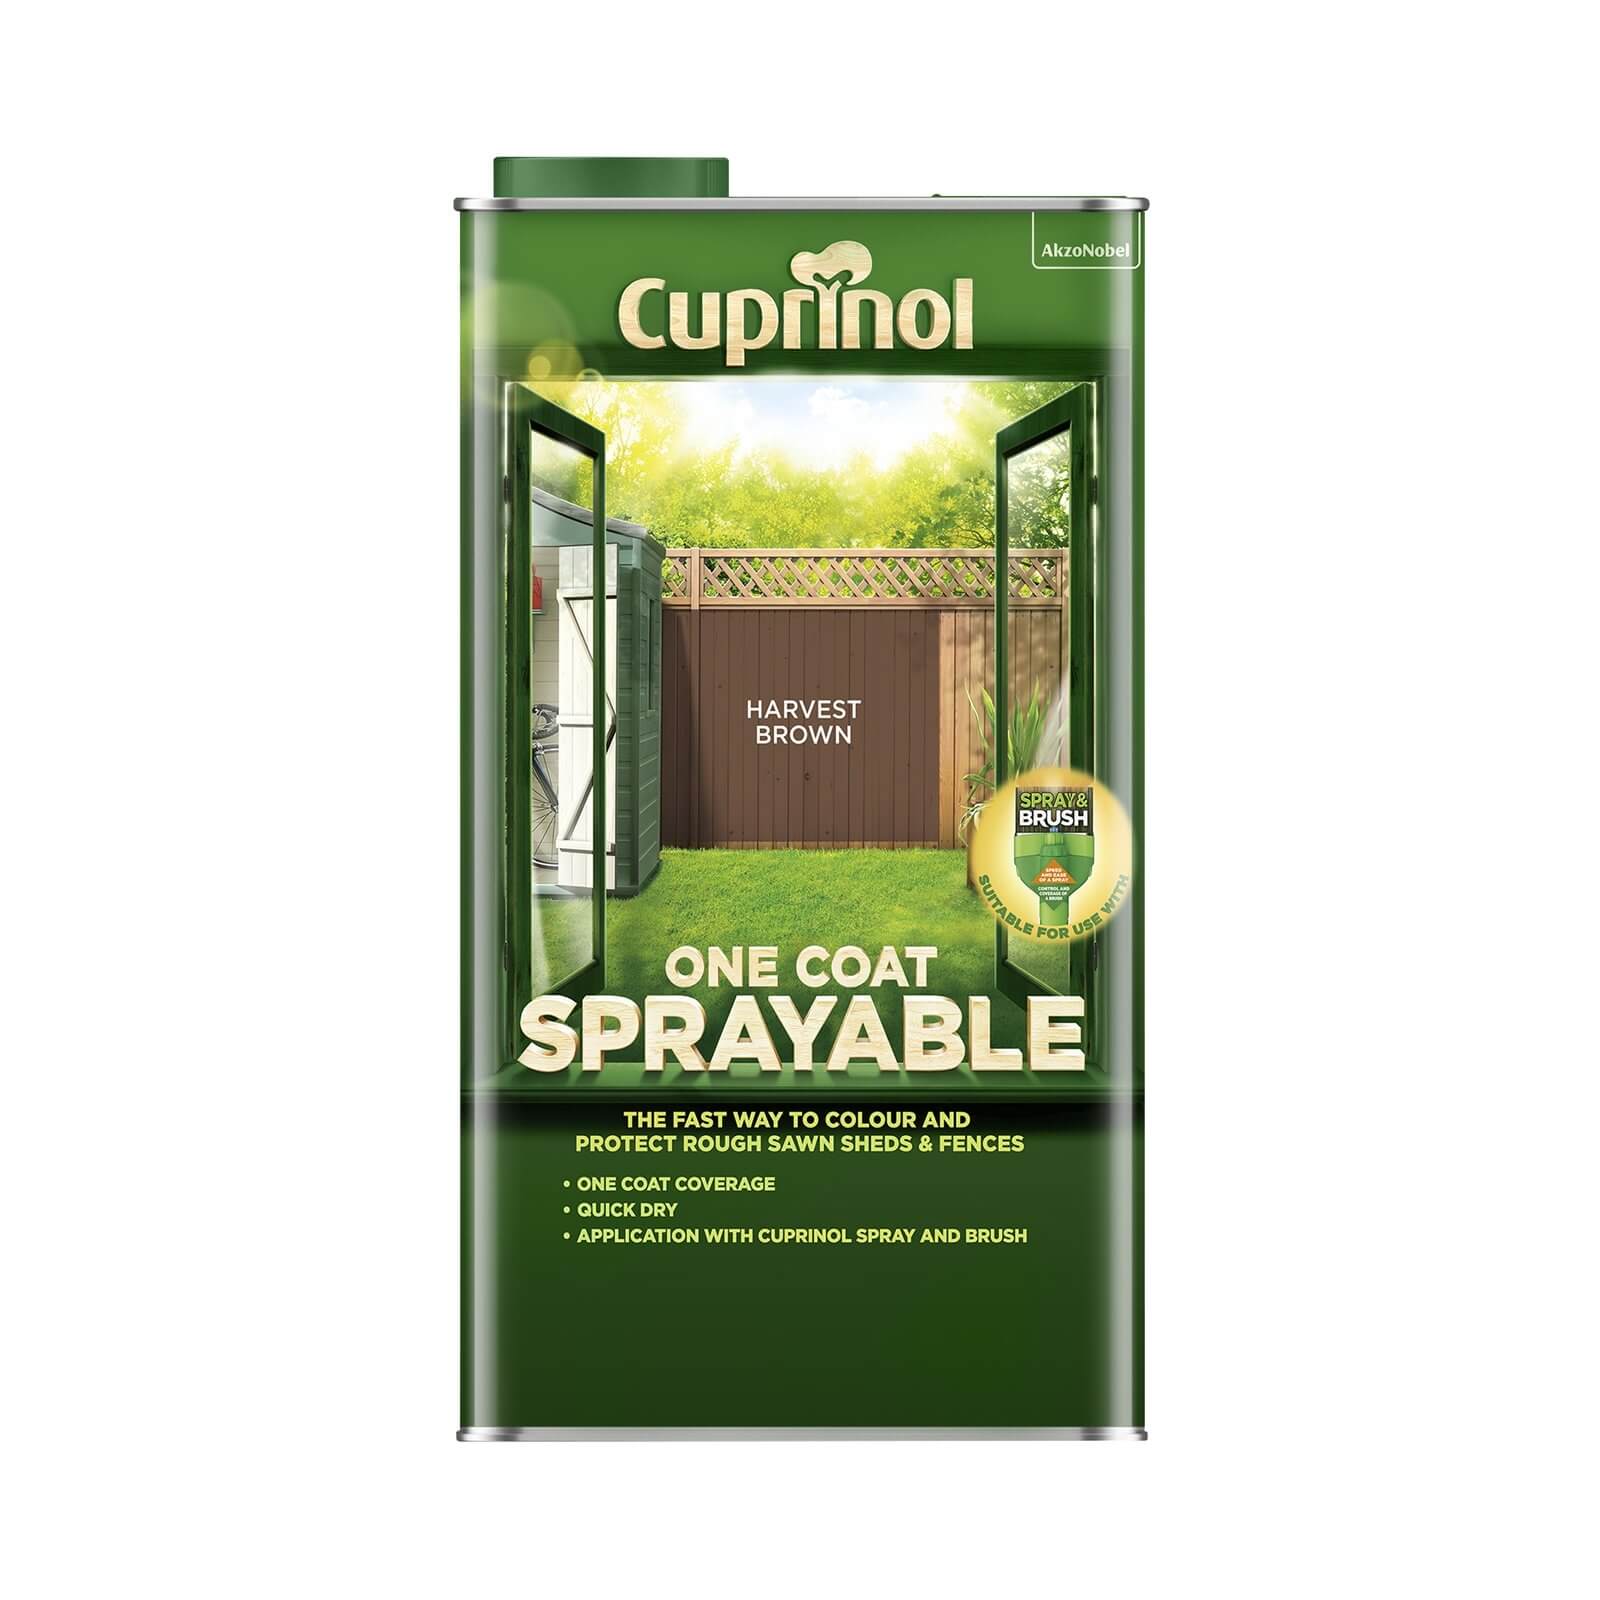 Cuprinol One Coat Sprayable Shed & Fence Paint Paint Harvest Brown - 5L